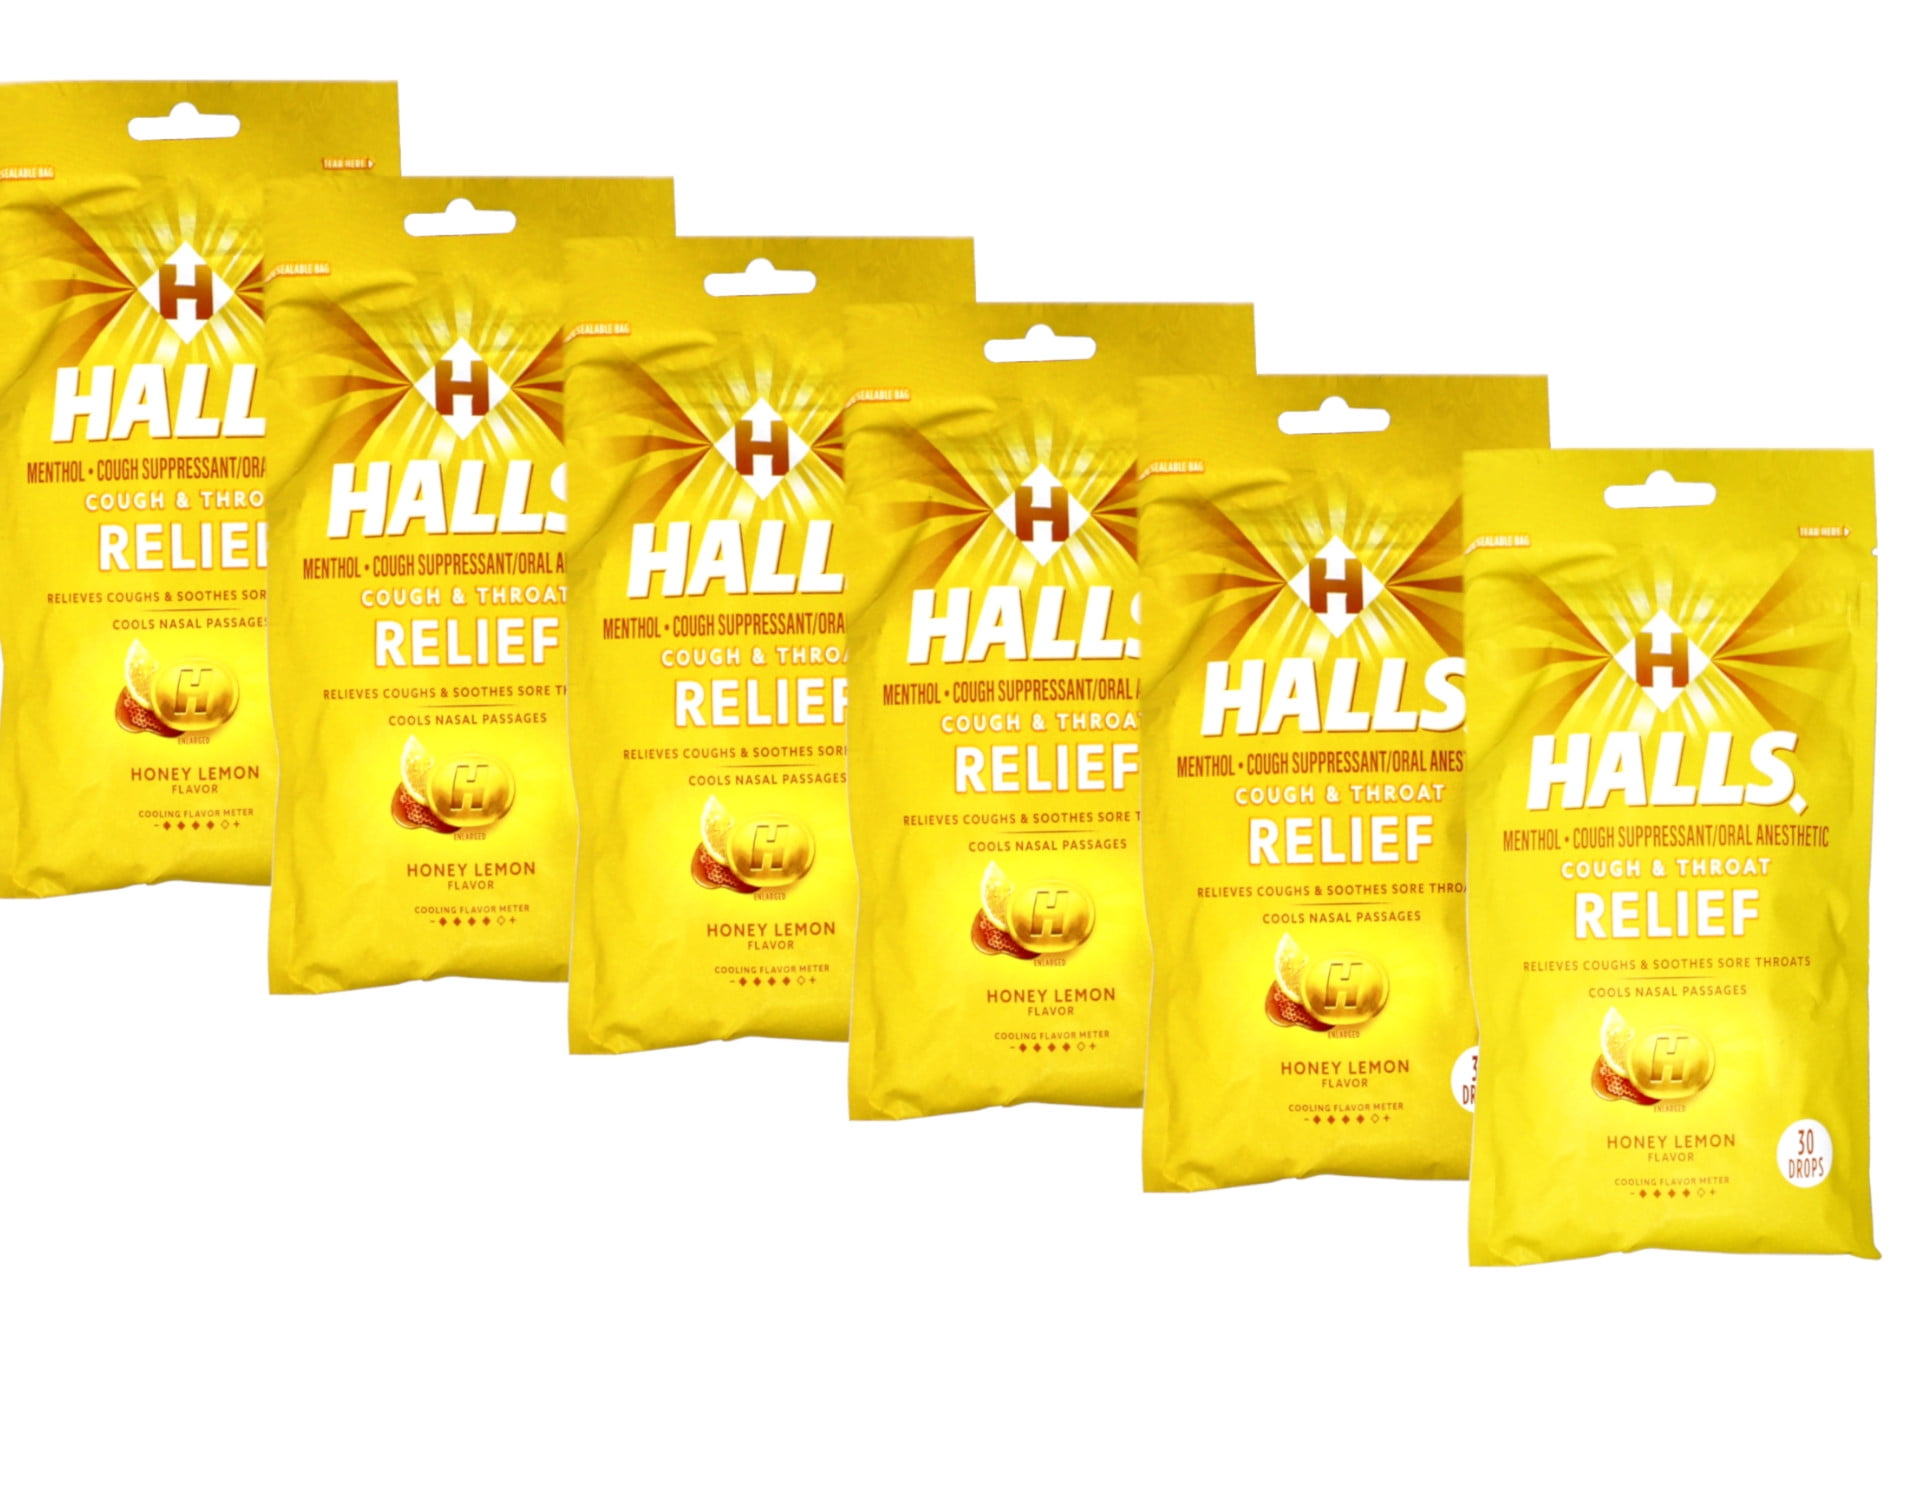 Wholesale Halls Cough Suppressant Honey Lemon - Bag of 30 Drops - Weiner's  LTD